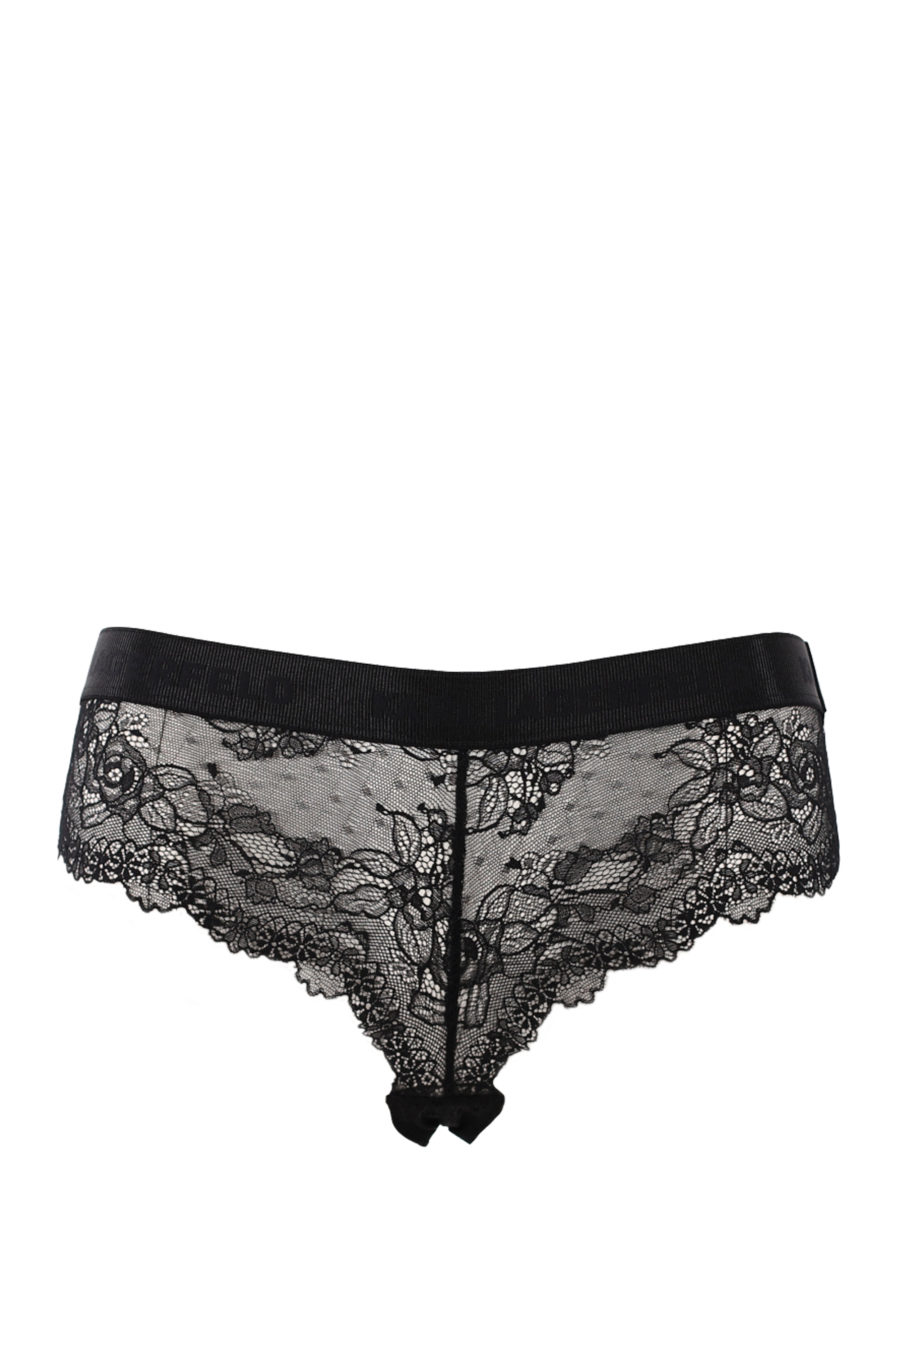 Black lace panties - IMG 0399